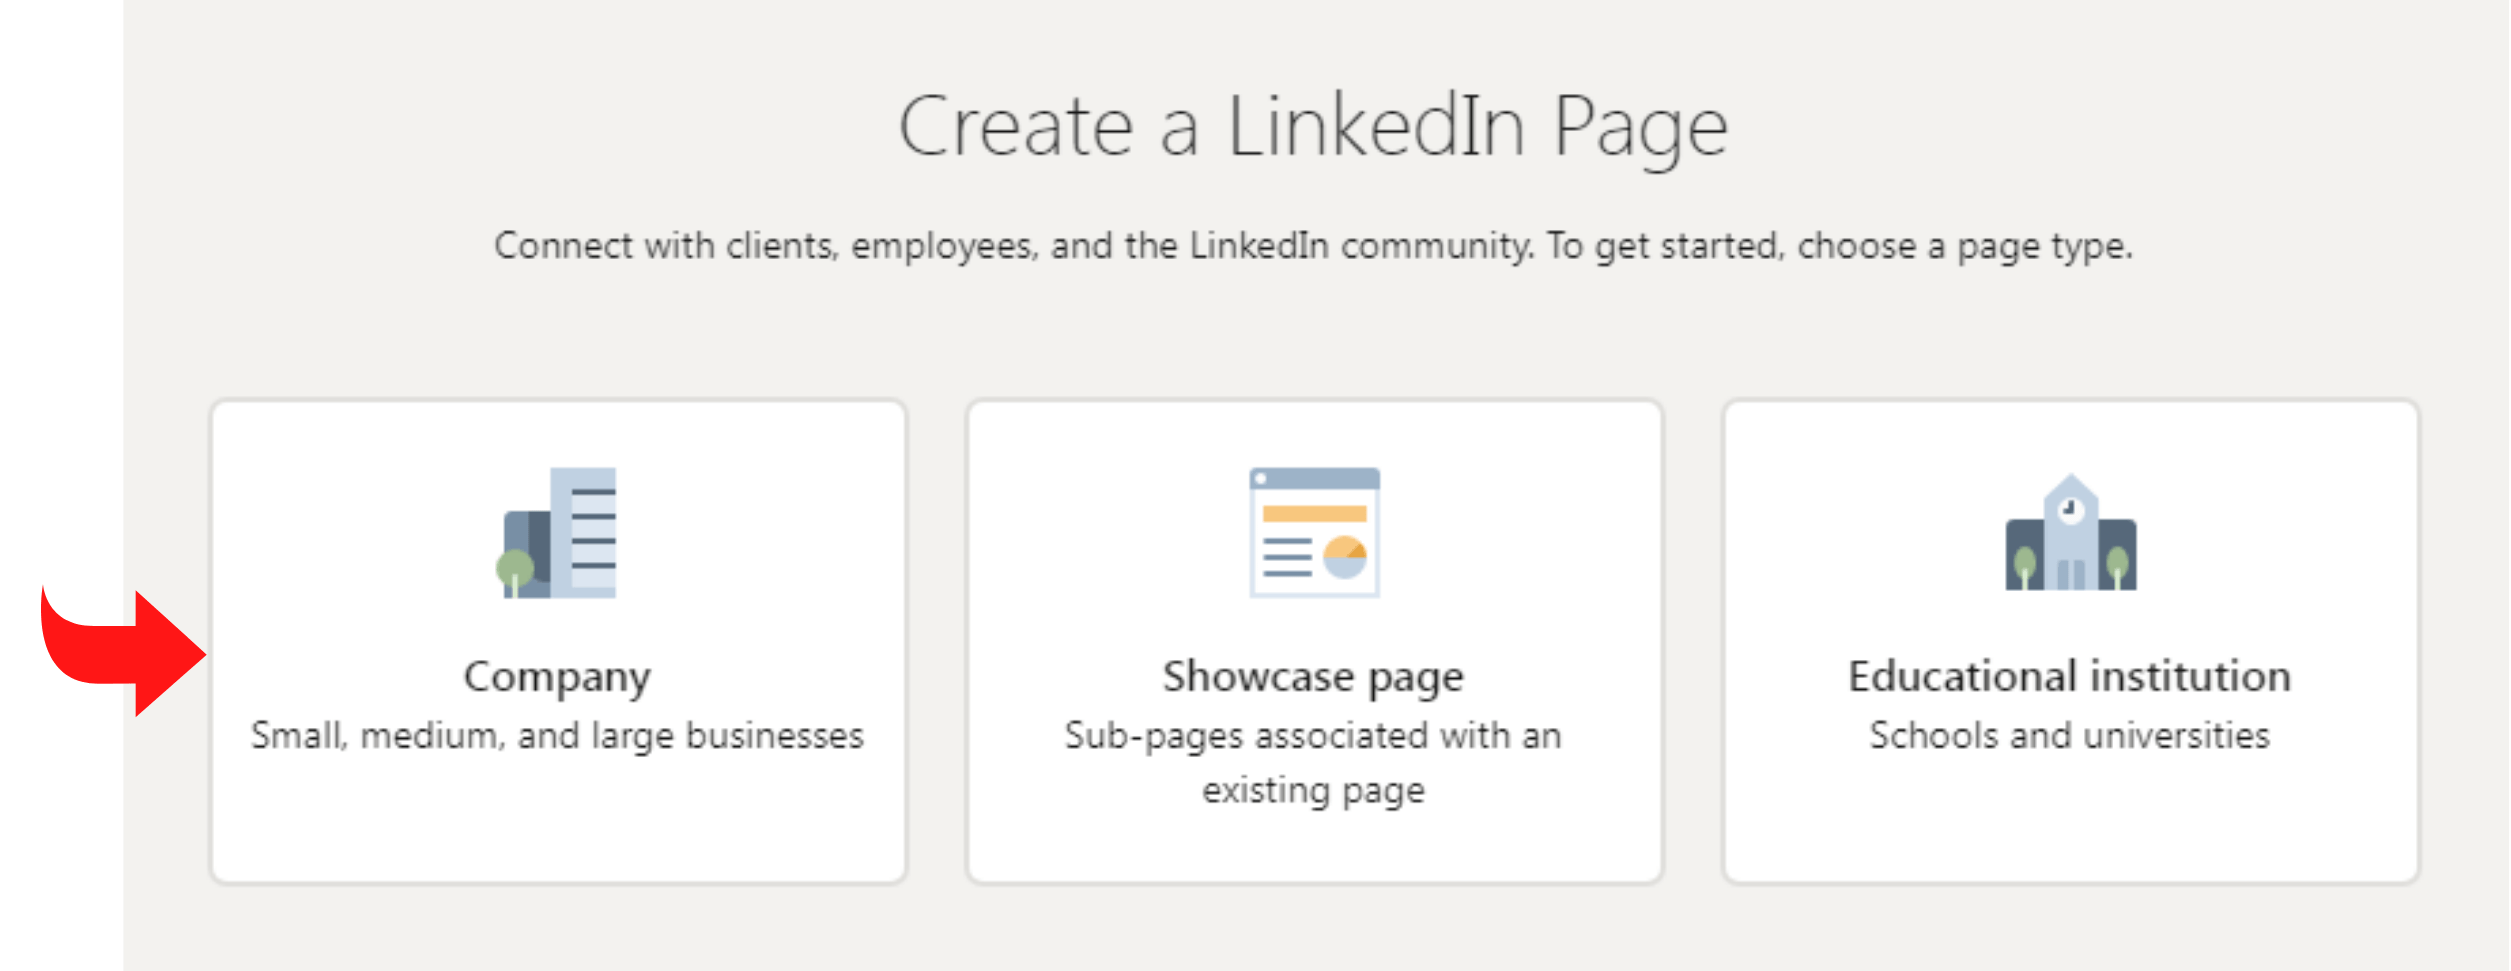 create-linkedin-page